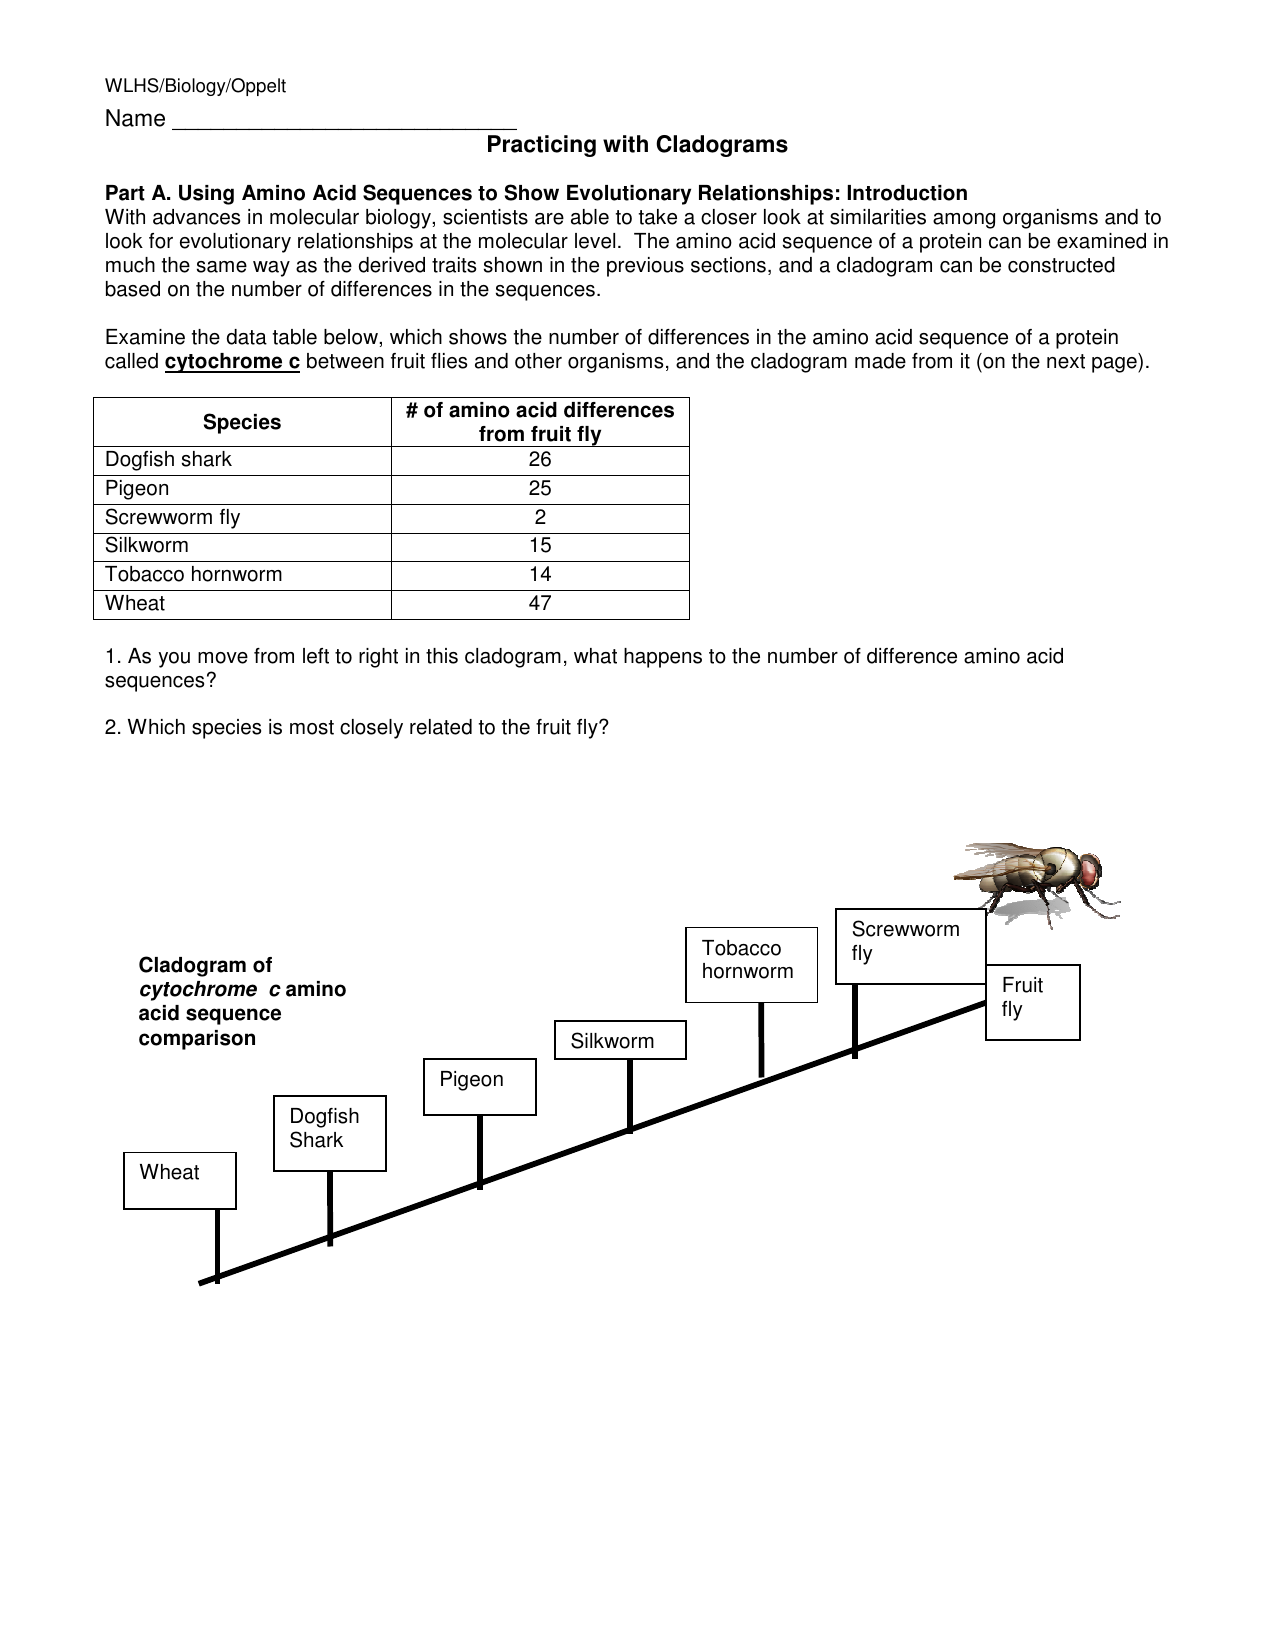 cladogram-practice-worksheet-answers-ivuyteq